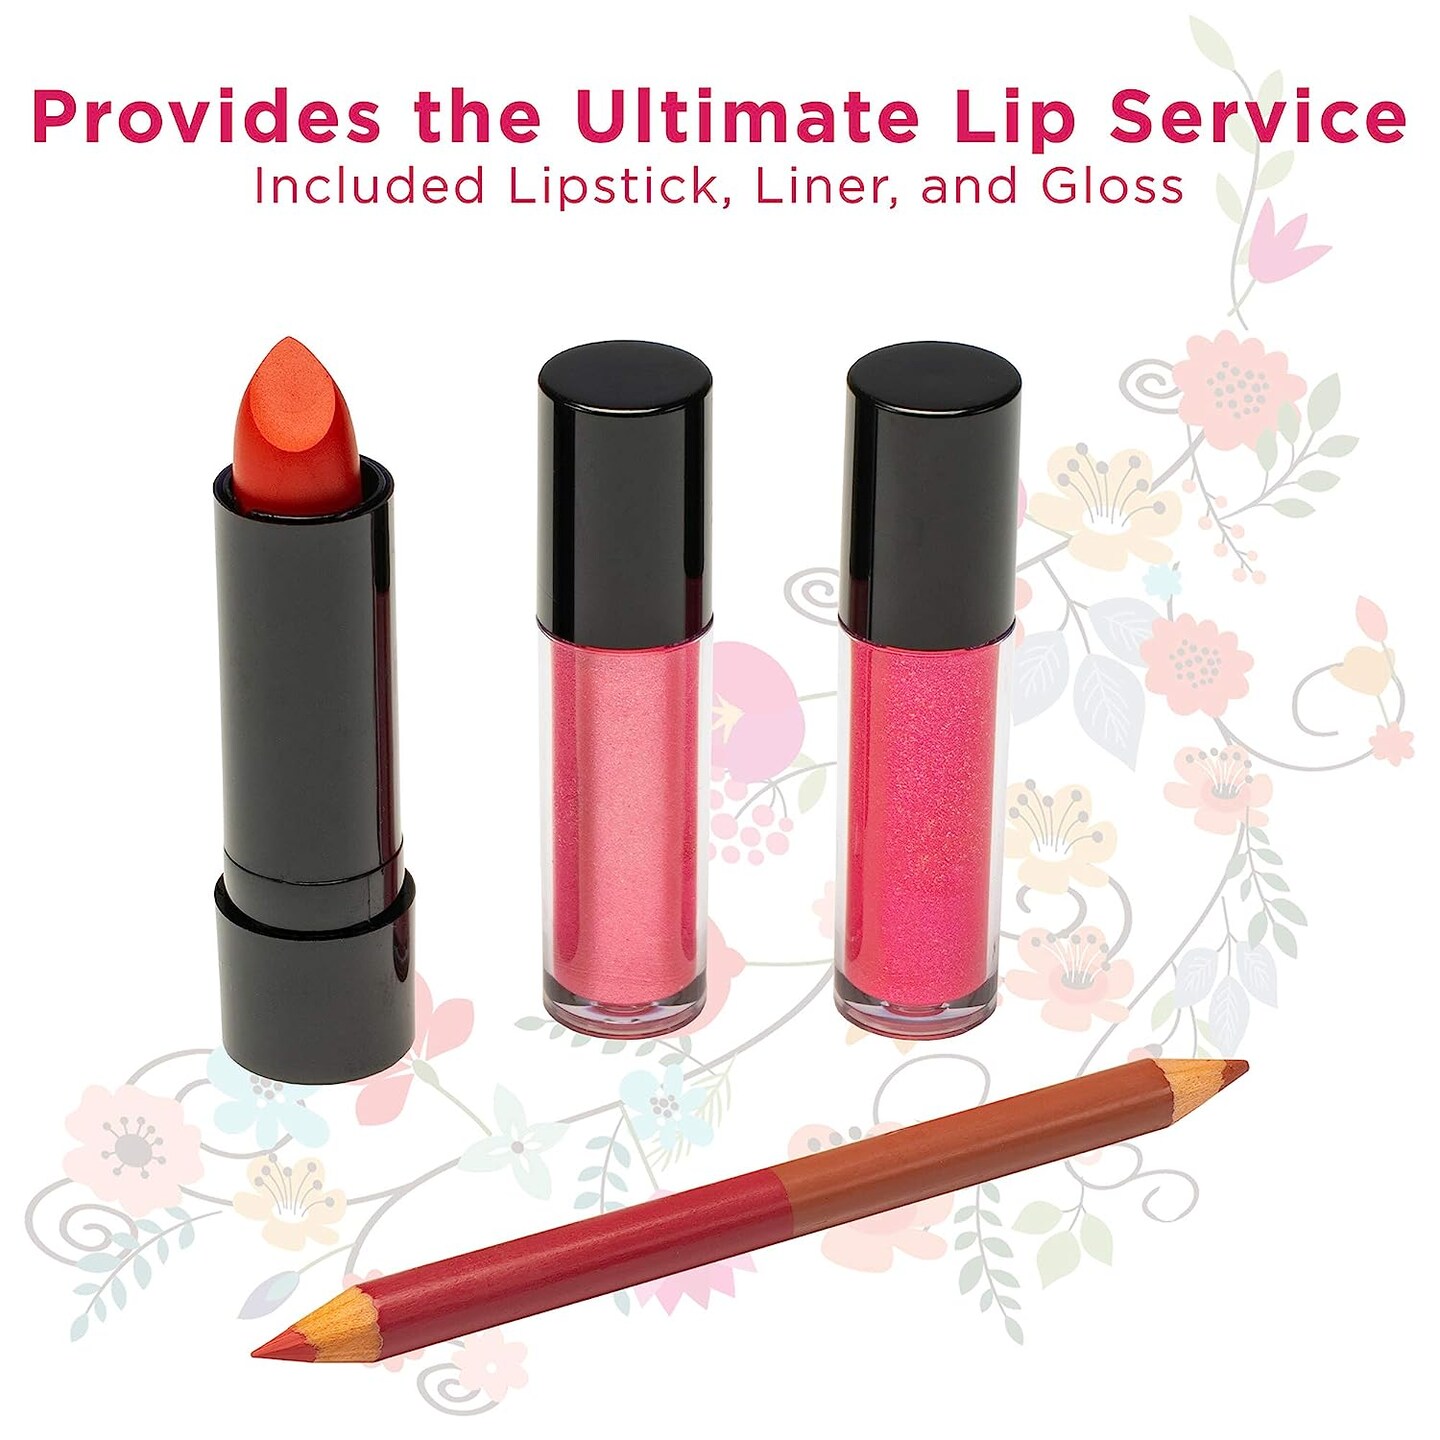 Vokai 74 Piece Makeup Kit, Eye Shadow, Glitters, Lip &#x26; Eye Liner Pencils, Lipstick, Blush, Concealer, Lip Gloss, Bronzer